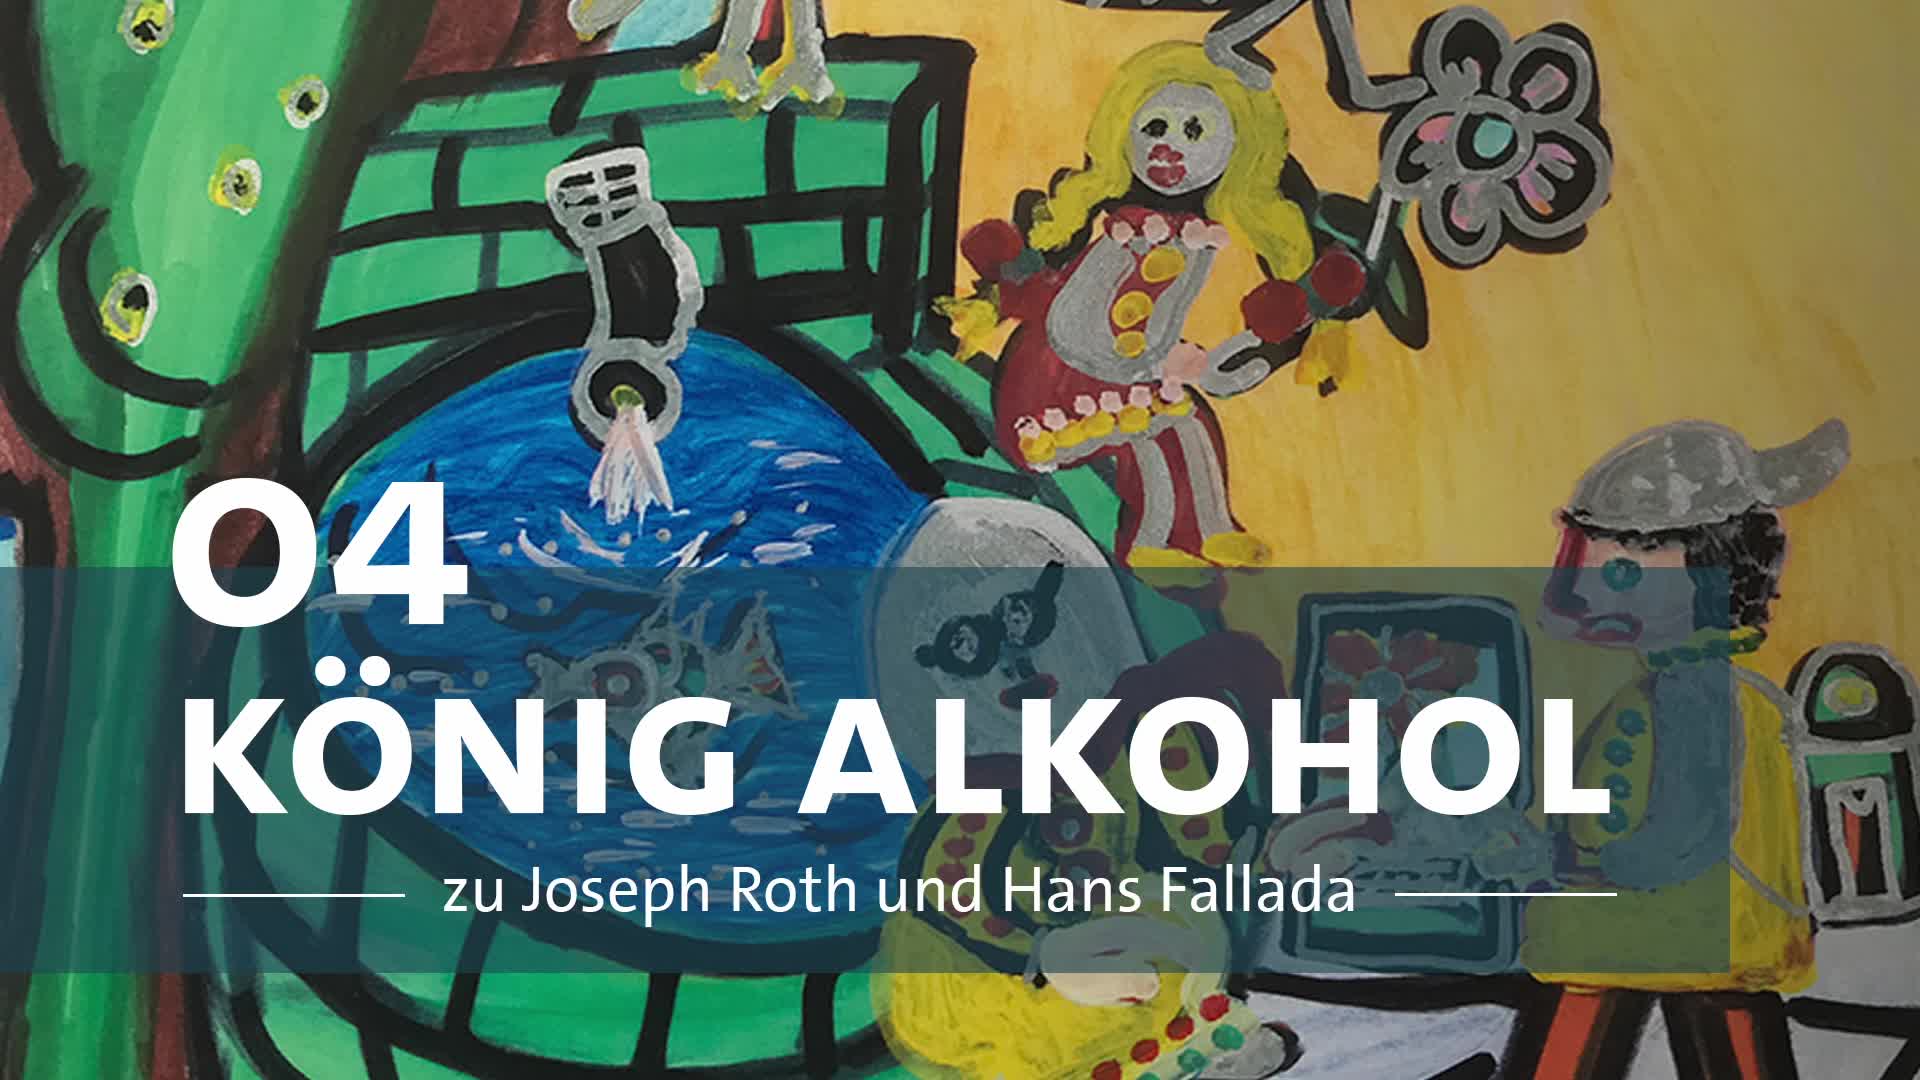 Thumbnail - "König Alkohol" - zu Joseph Roth und Hans Fallada